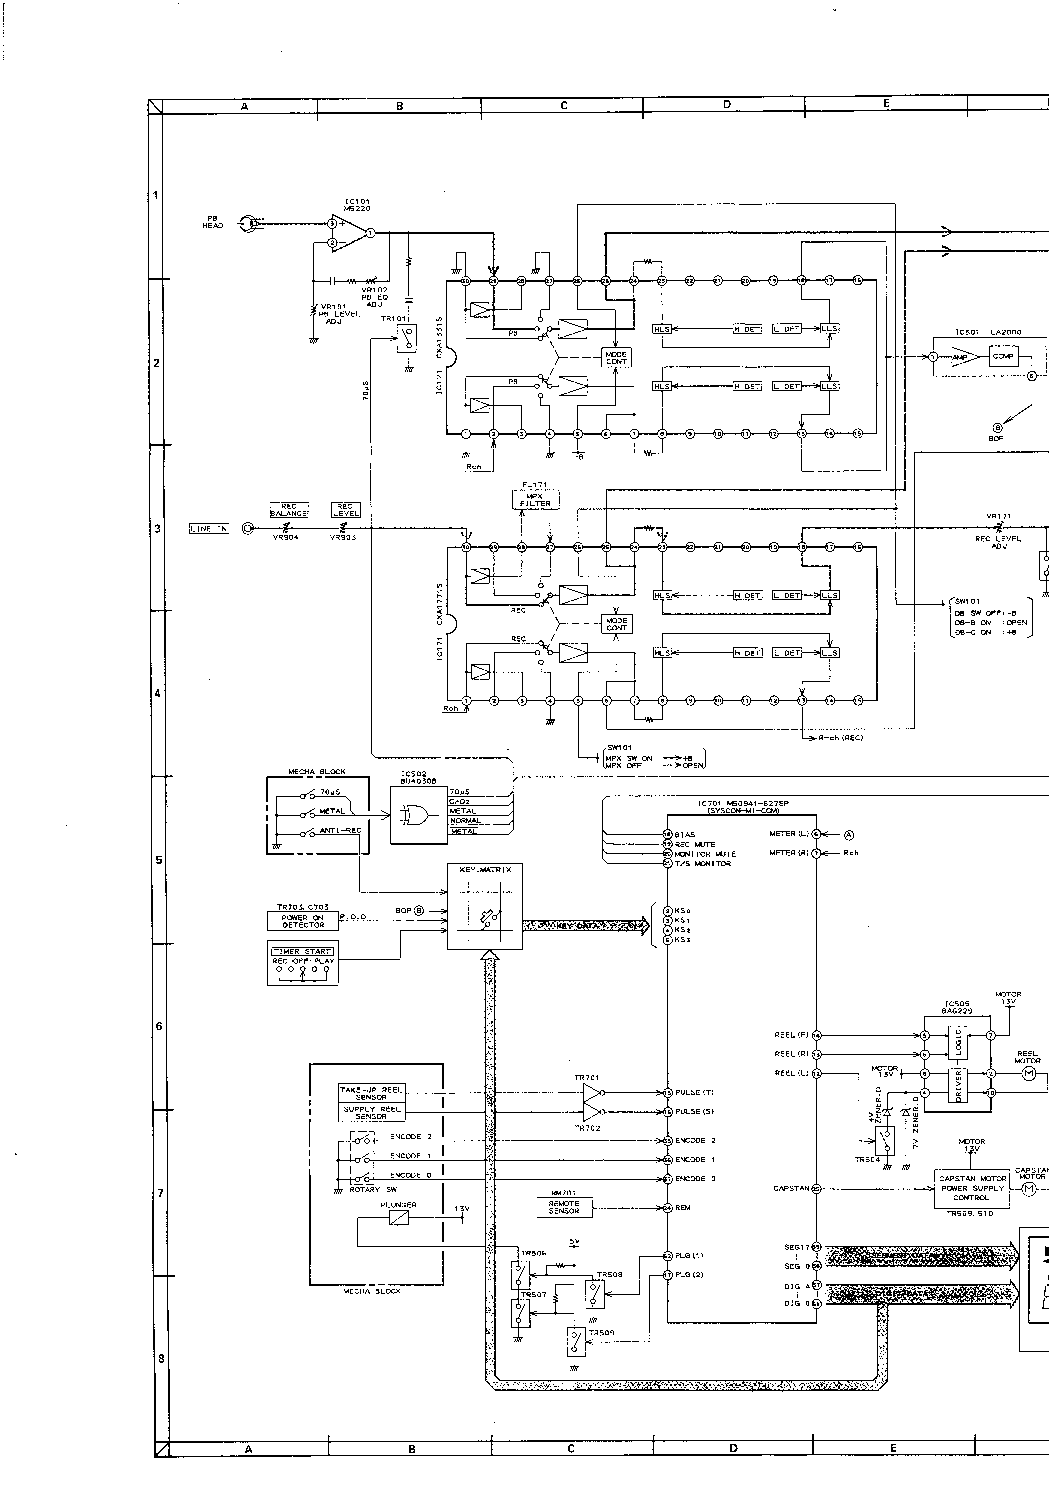 AKAI DX-57 GX-67 SCH service manual (2nd page)